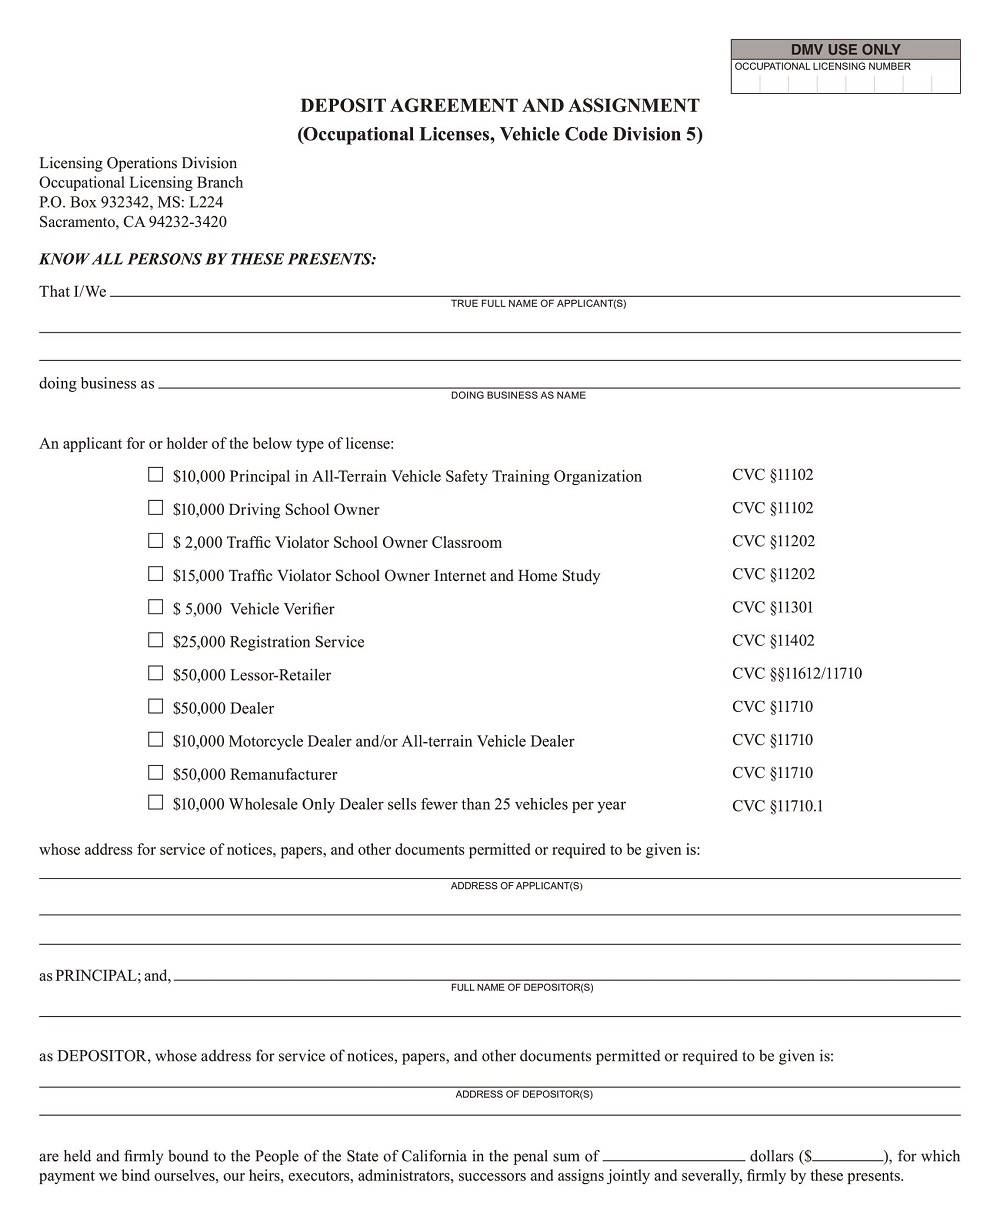 Vehicle Deposit Agreement Form Sample